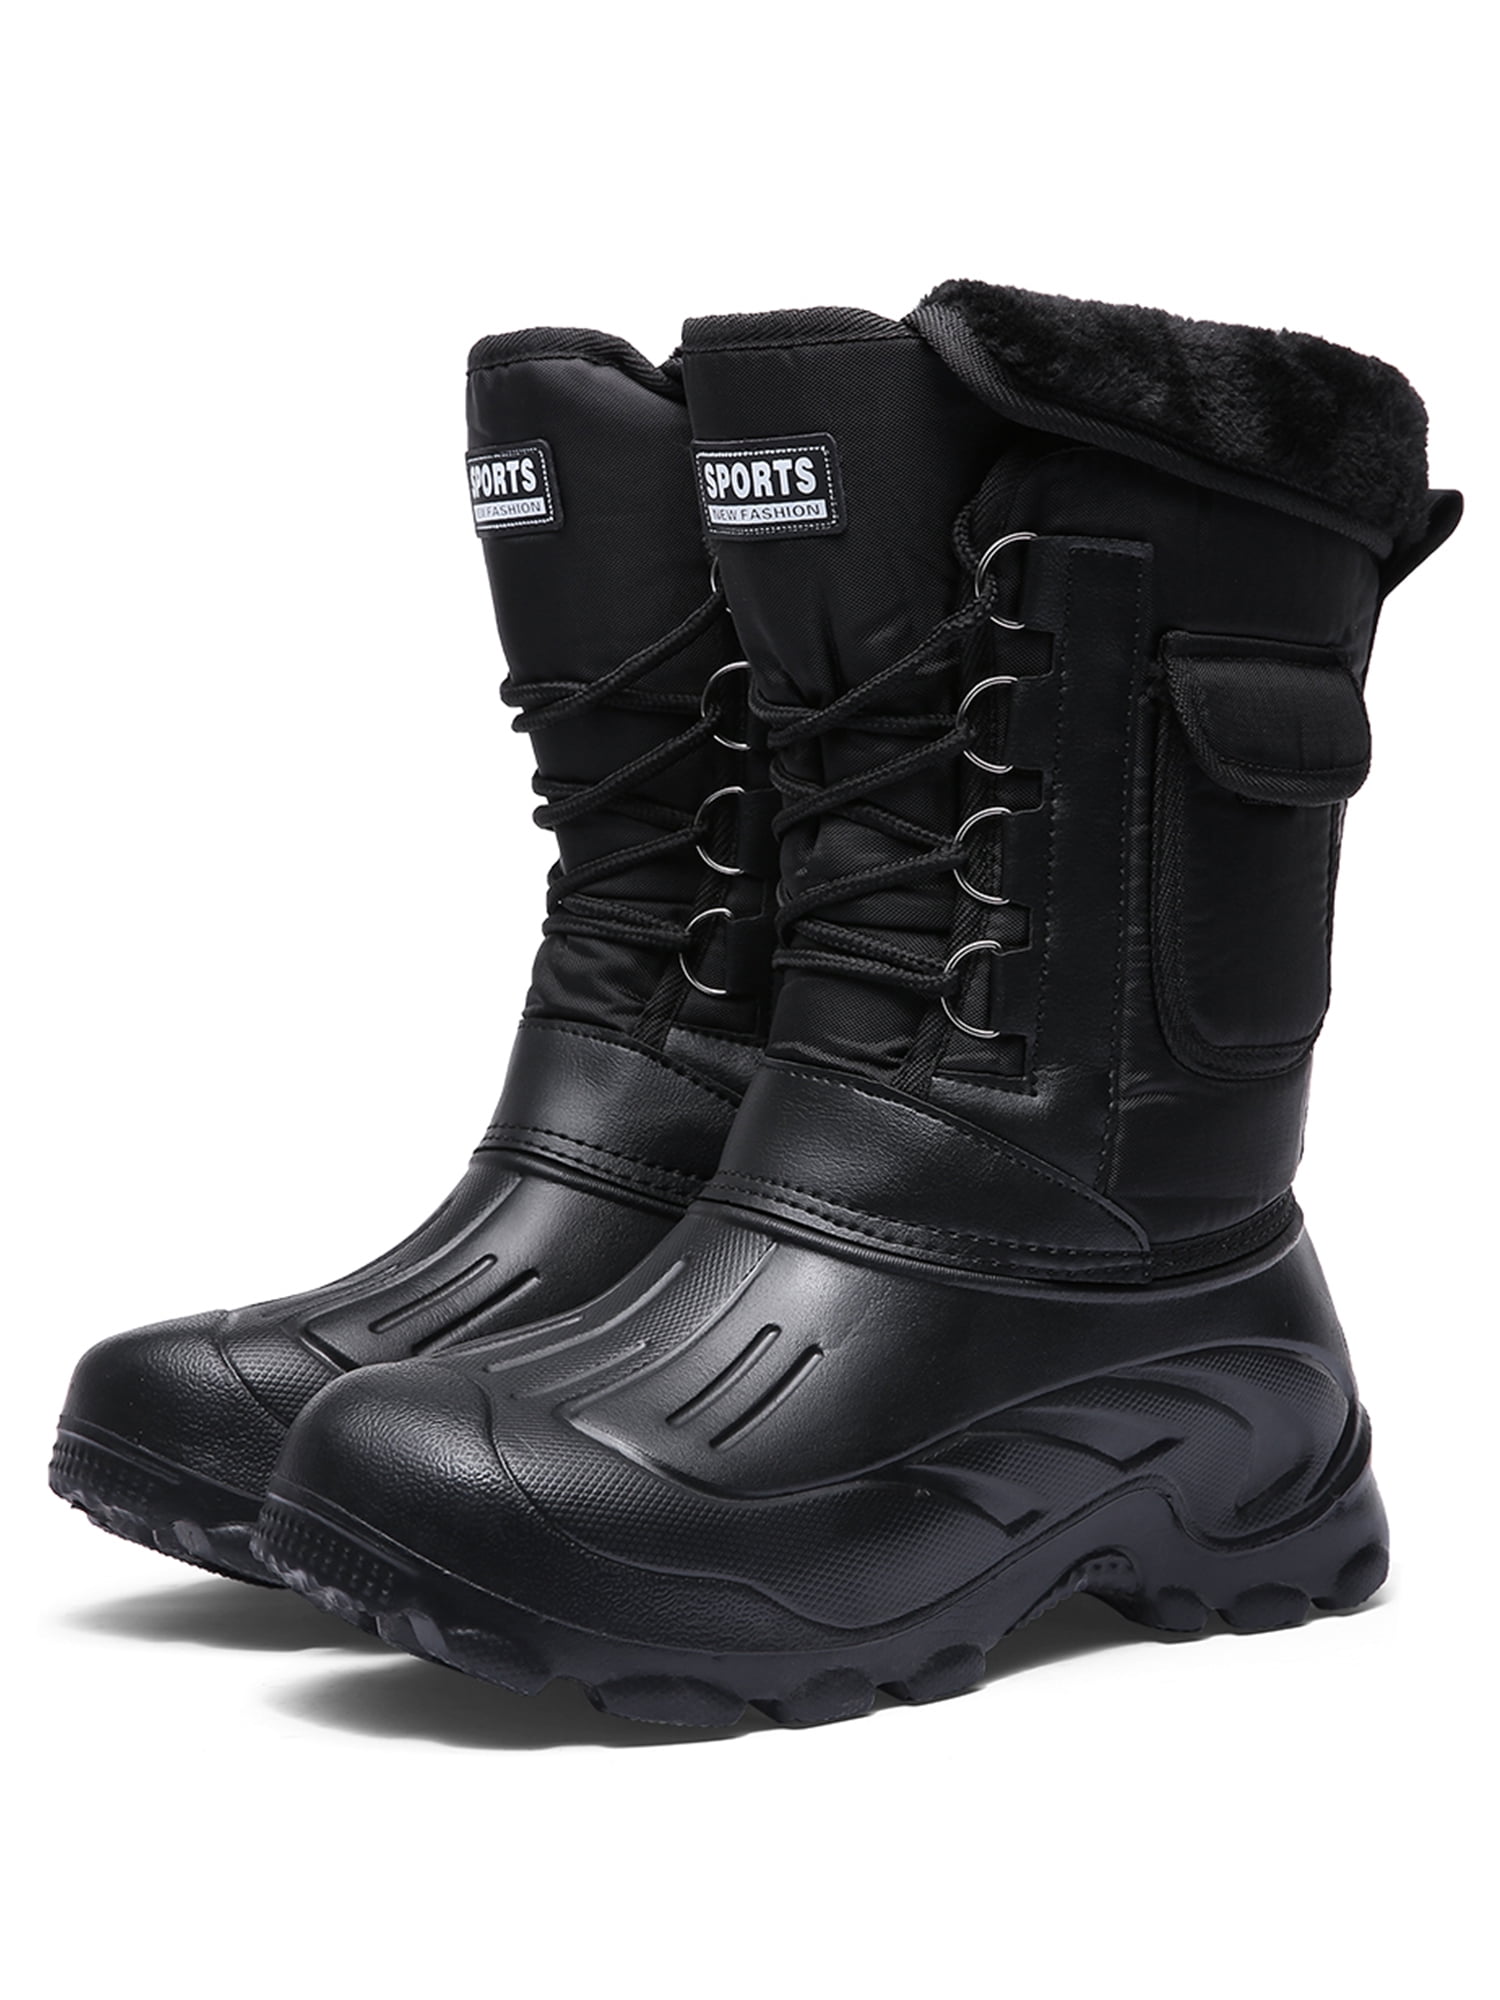 Own Shoe - OwnShoe Men&amp;#39;s Snow Boot Waterproof Warm Fur Lined Rain Booties Outdoor Shoes